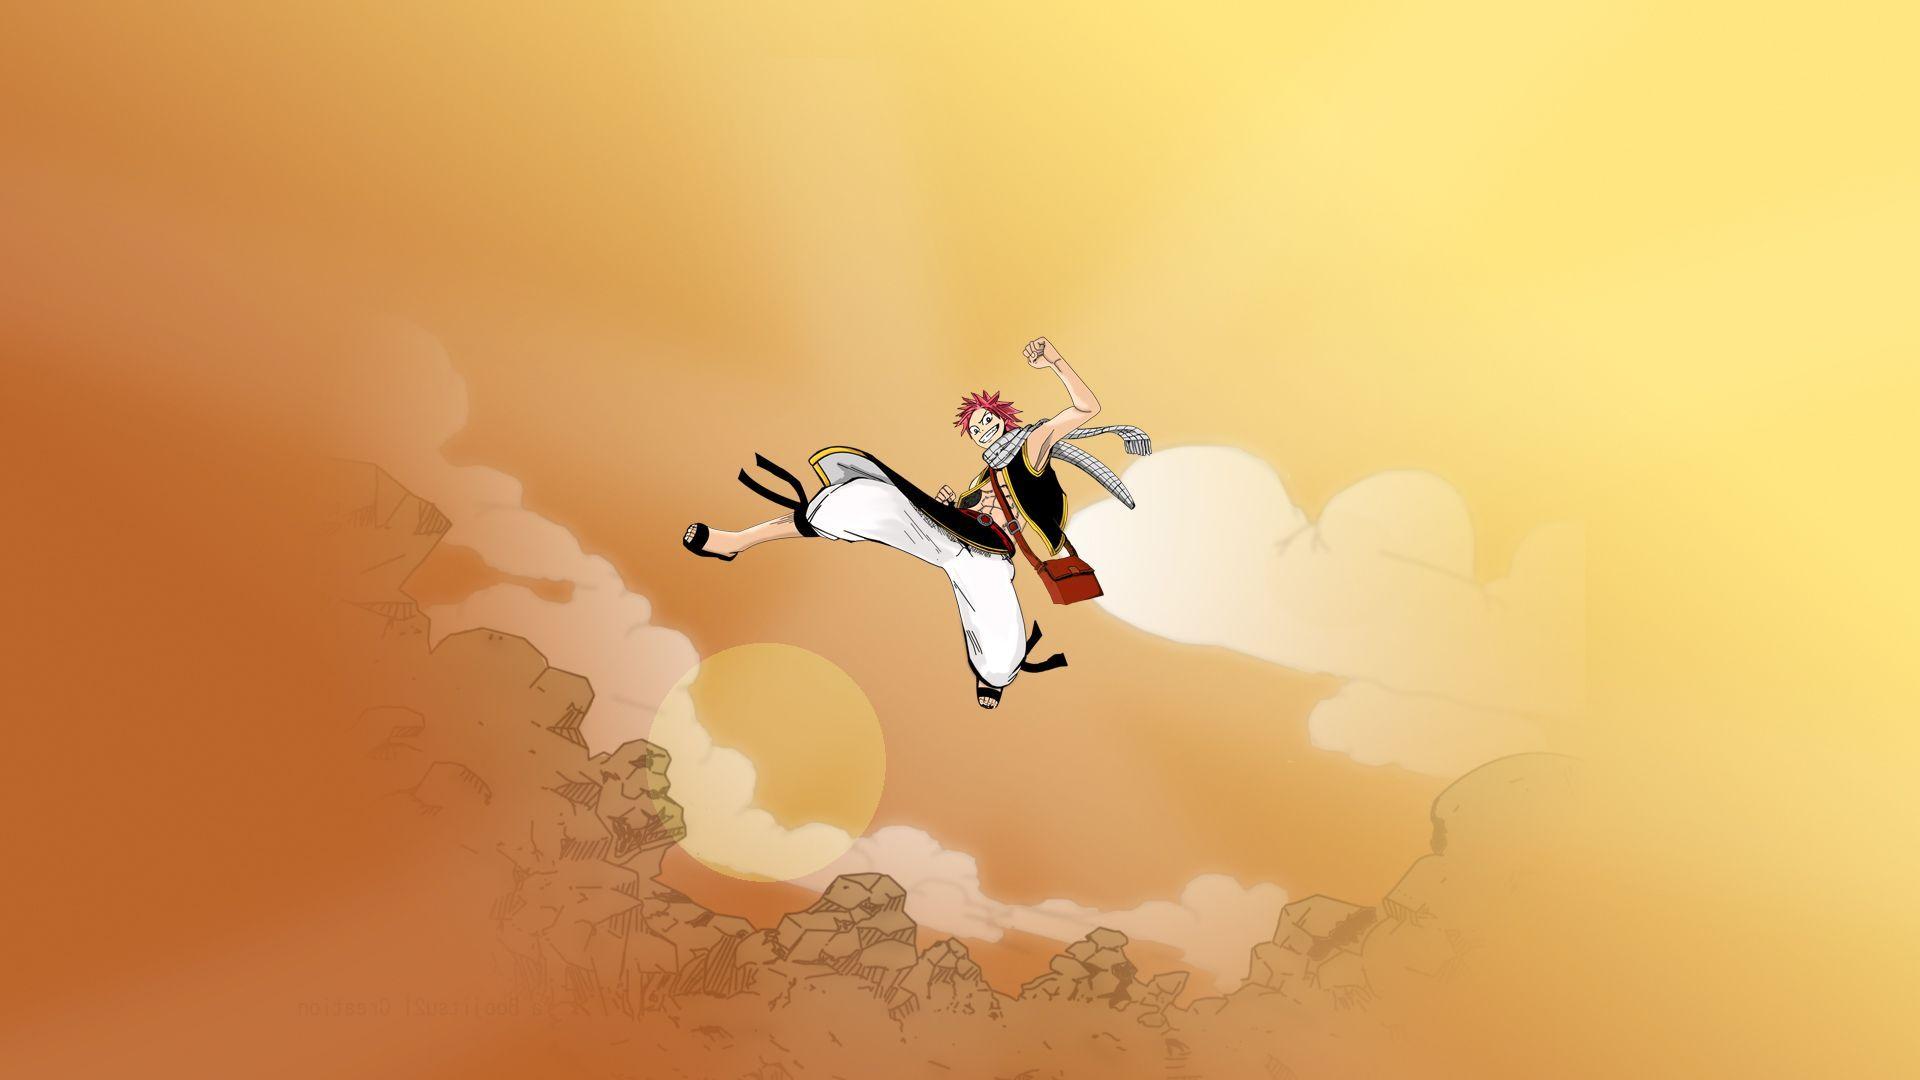 Natsu Dragneel Kicking In The Air - Natsu Dragneel Kicking - HD Wallpaper 